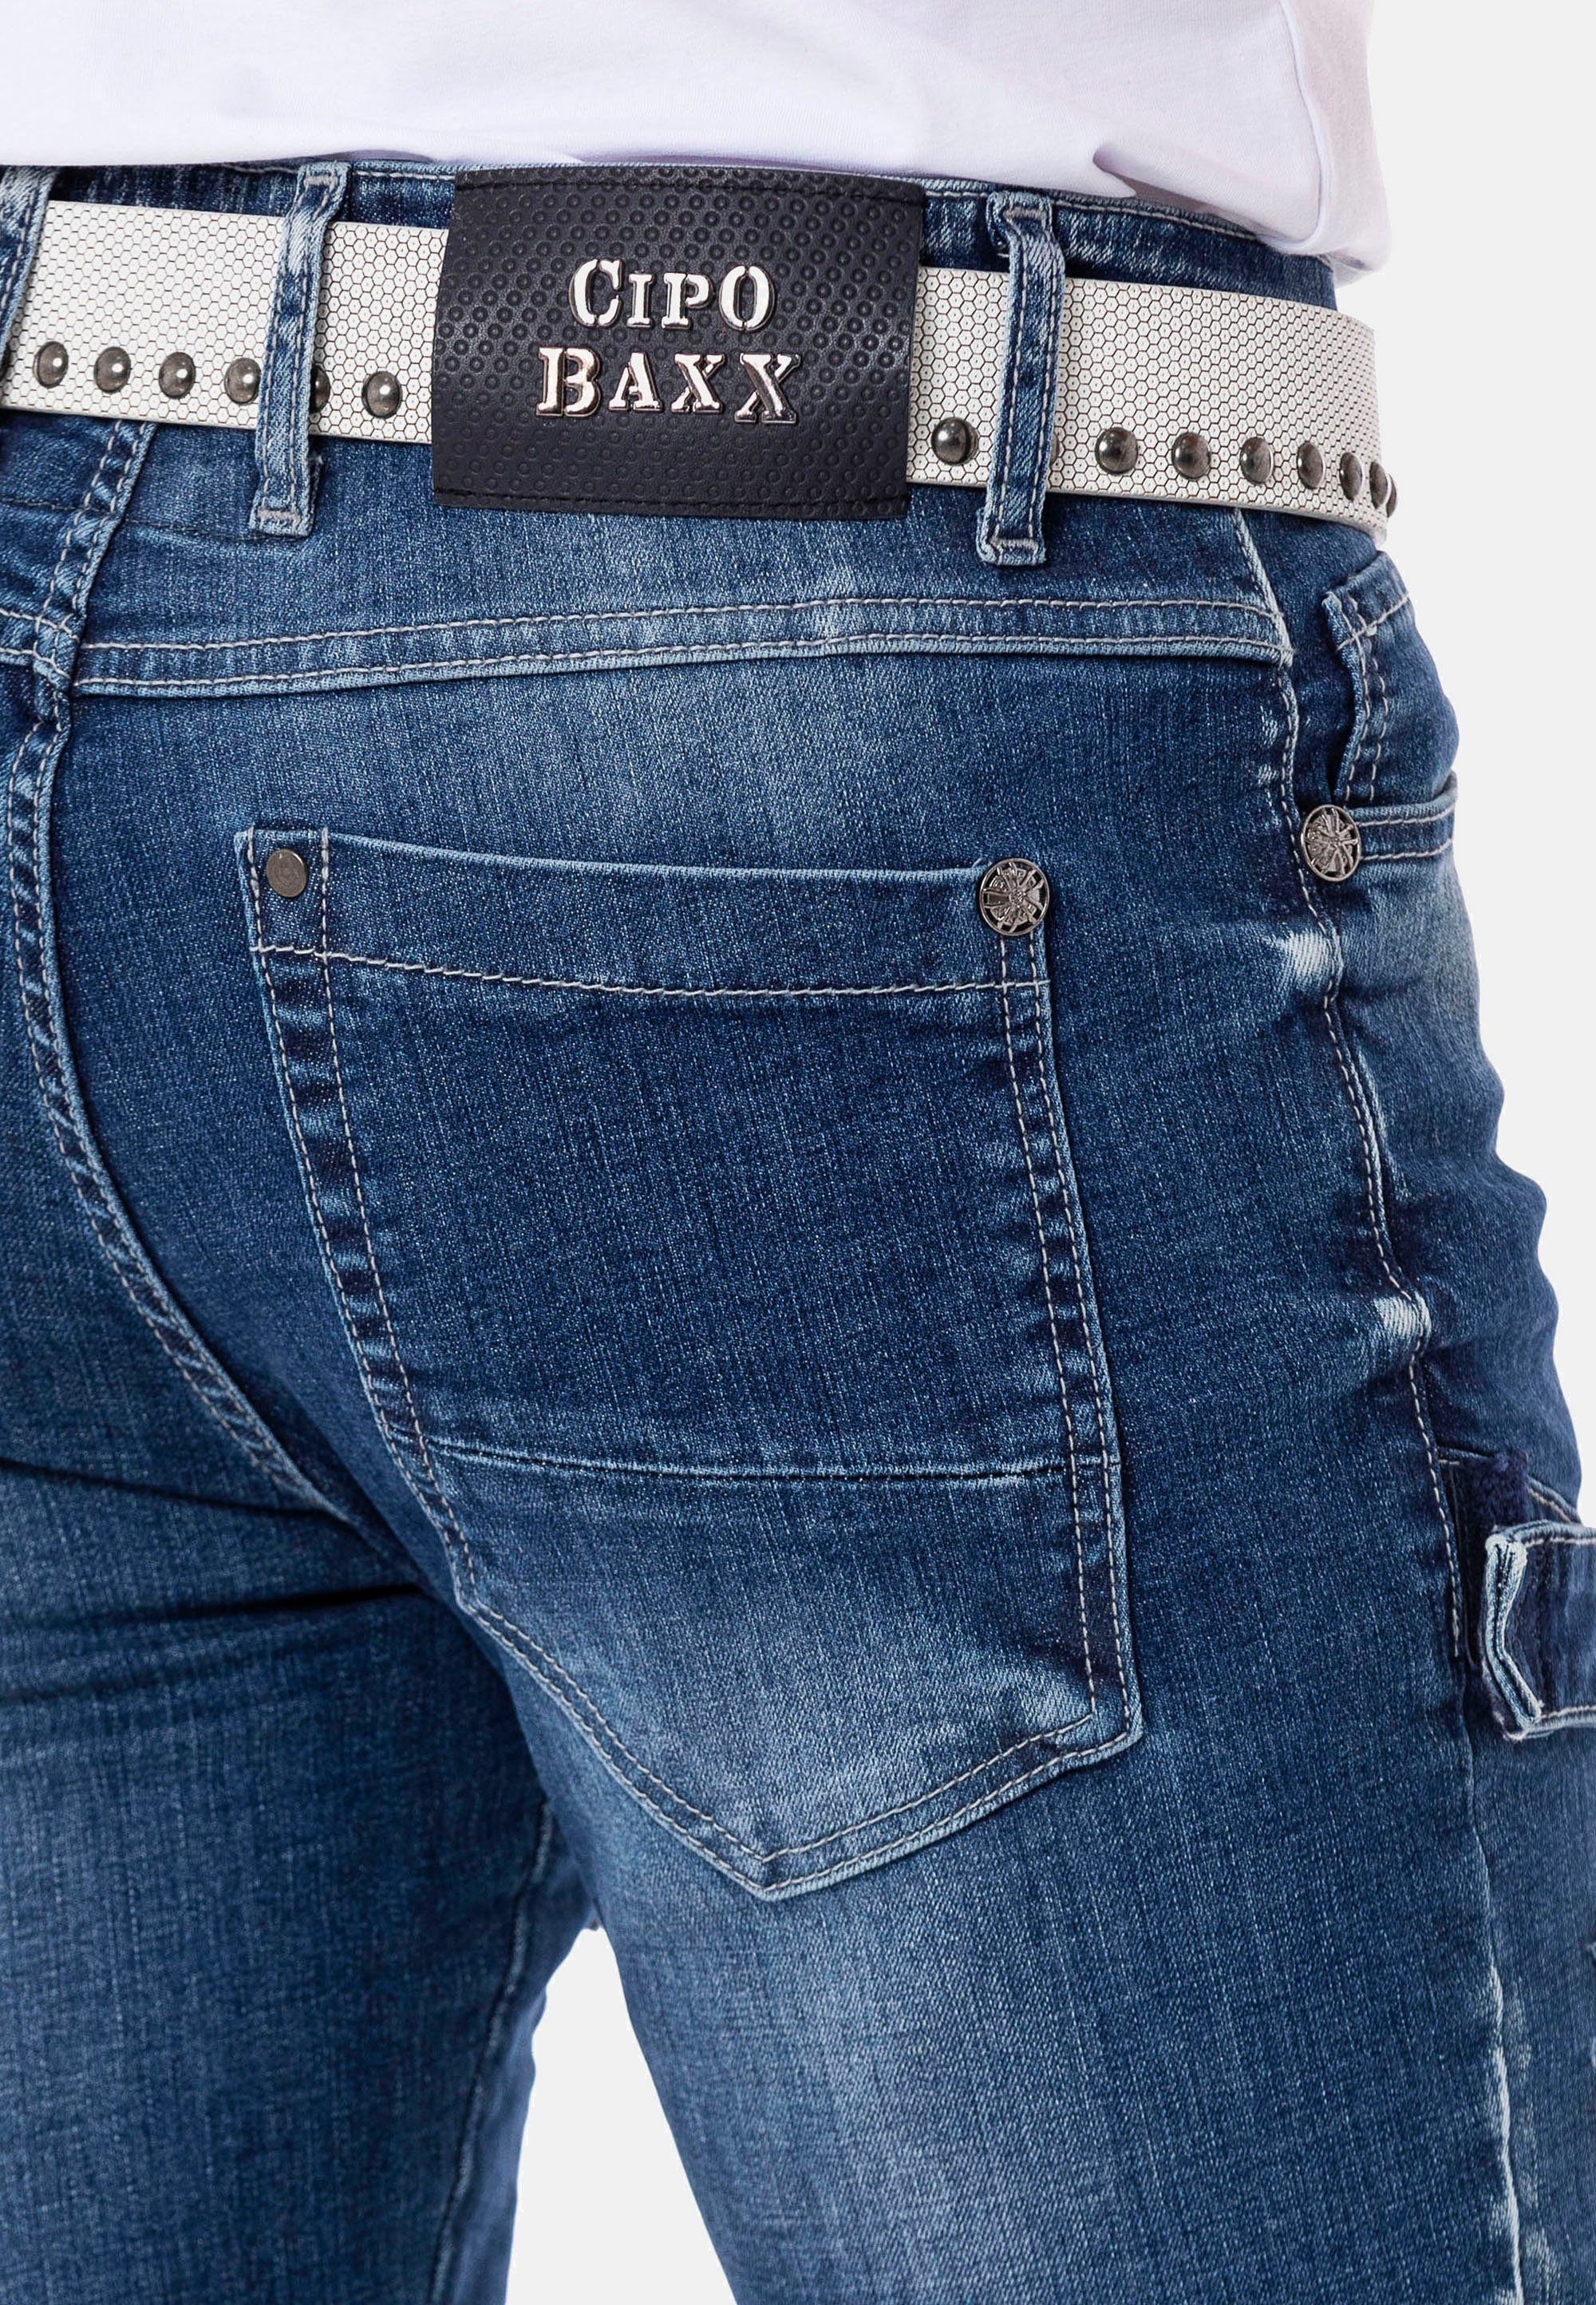 & Baxx Schnitt Cipo Straight-Jeans geradem in